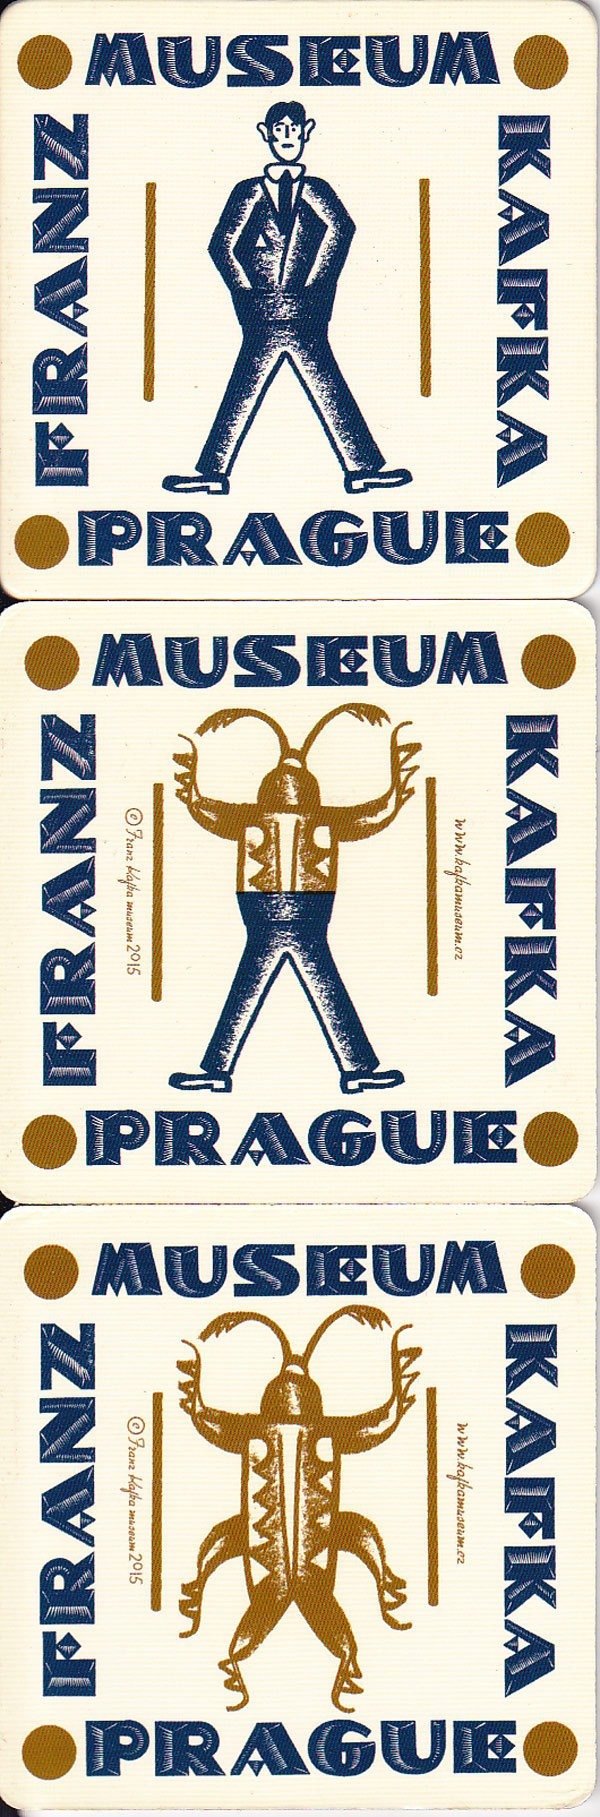 Franz Kafka Museum Prague by Garcia Lorca, Federico